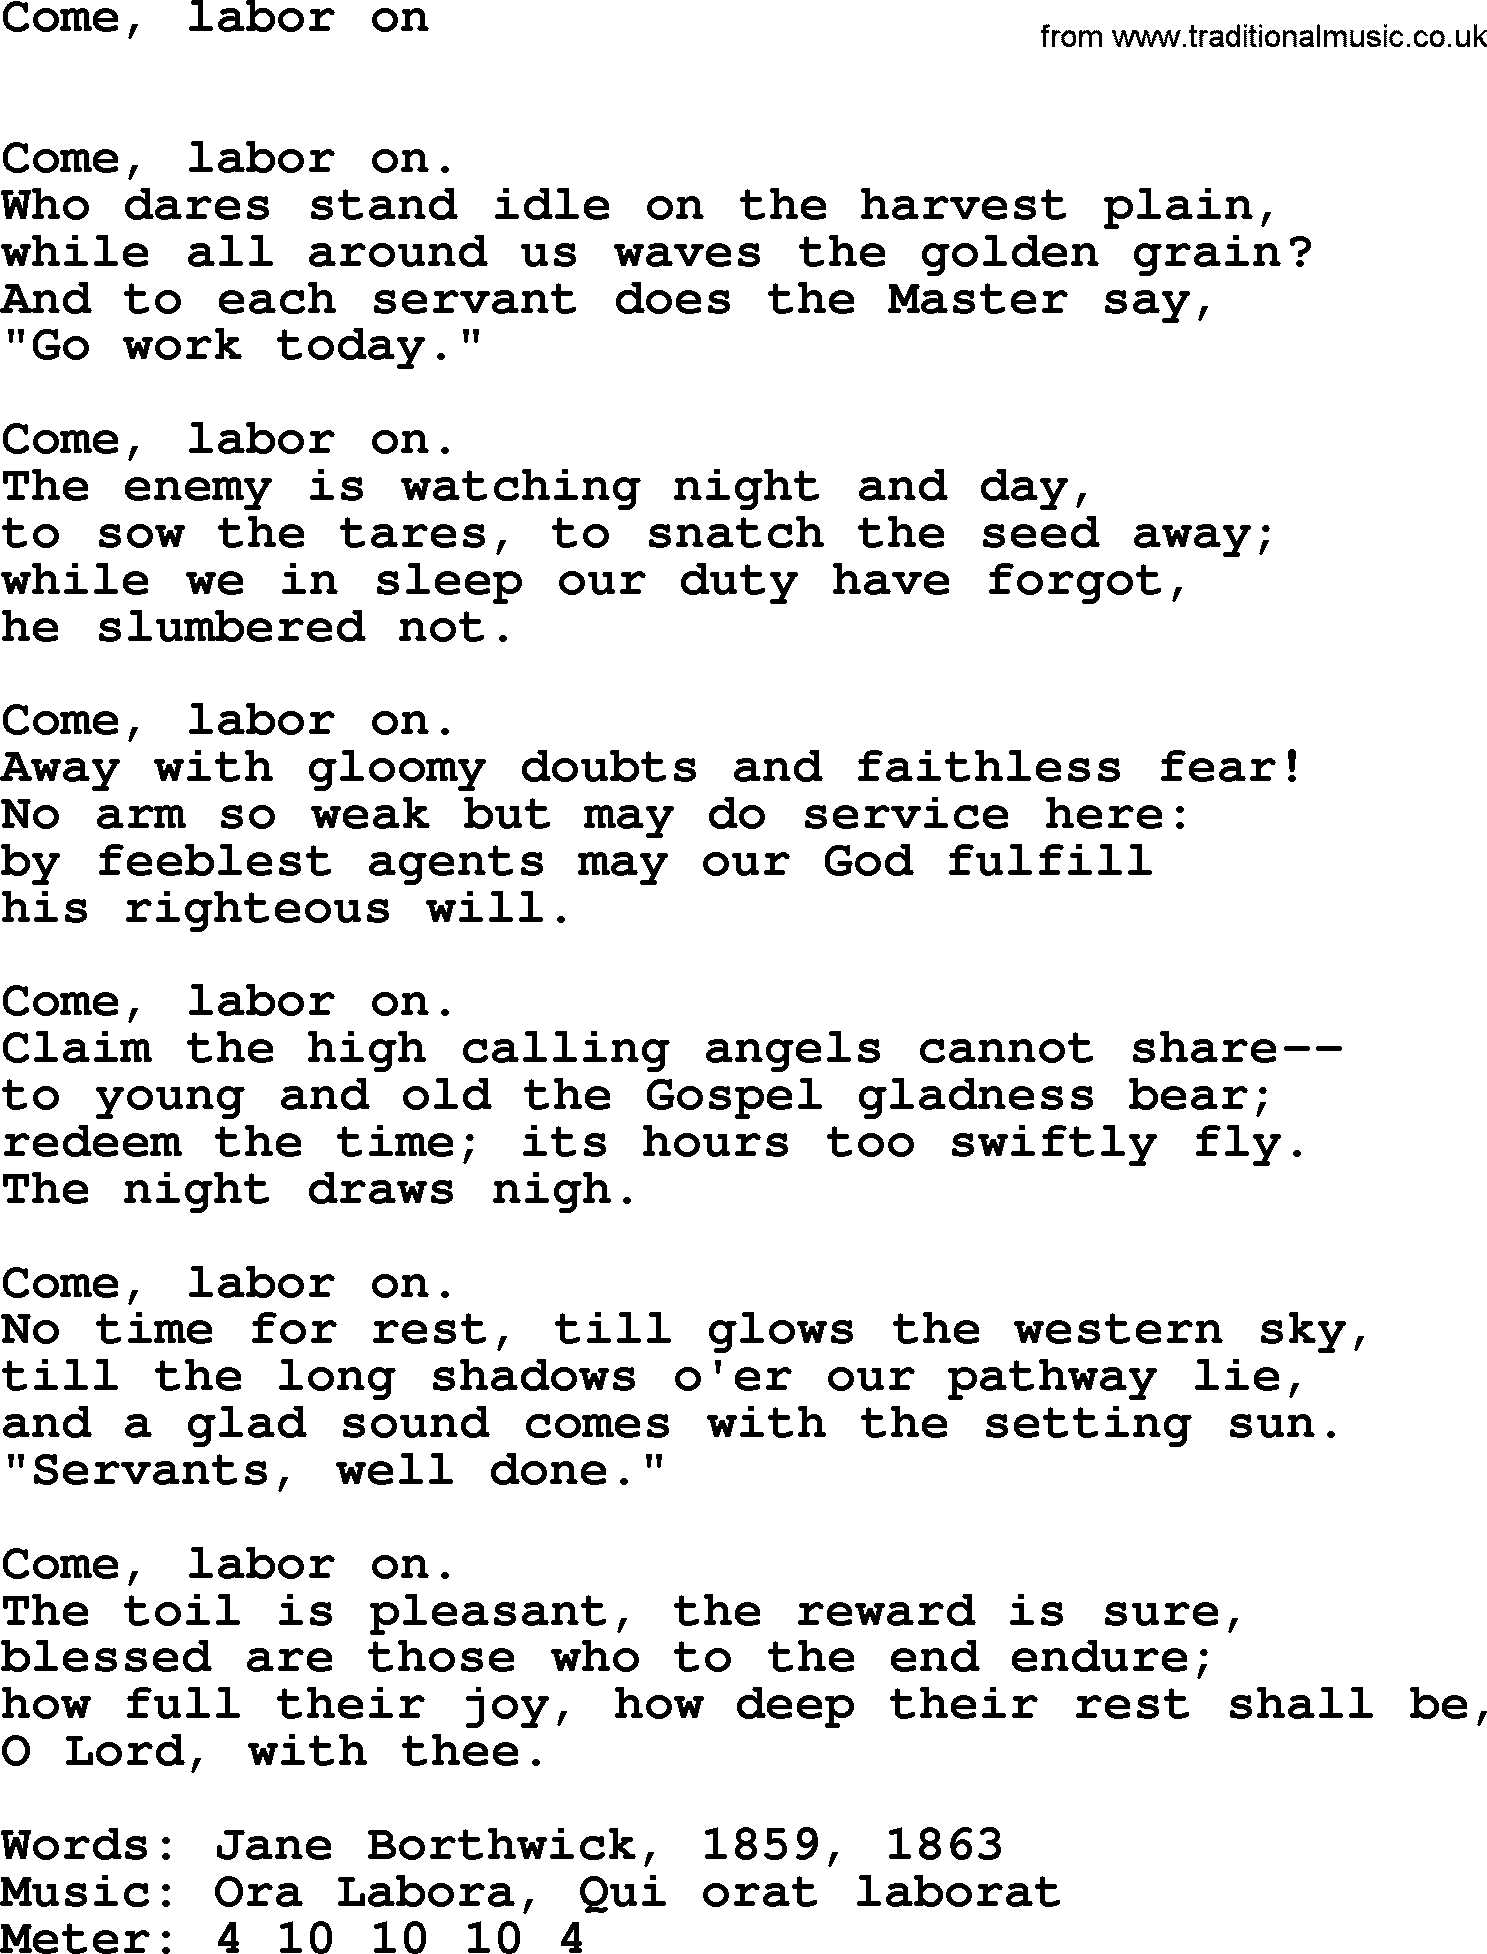 Book of Common Praise Hymn: Come, Labor On.txt lyrics with midi music